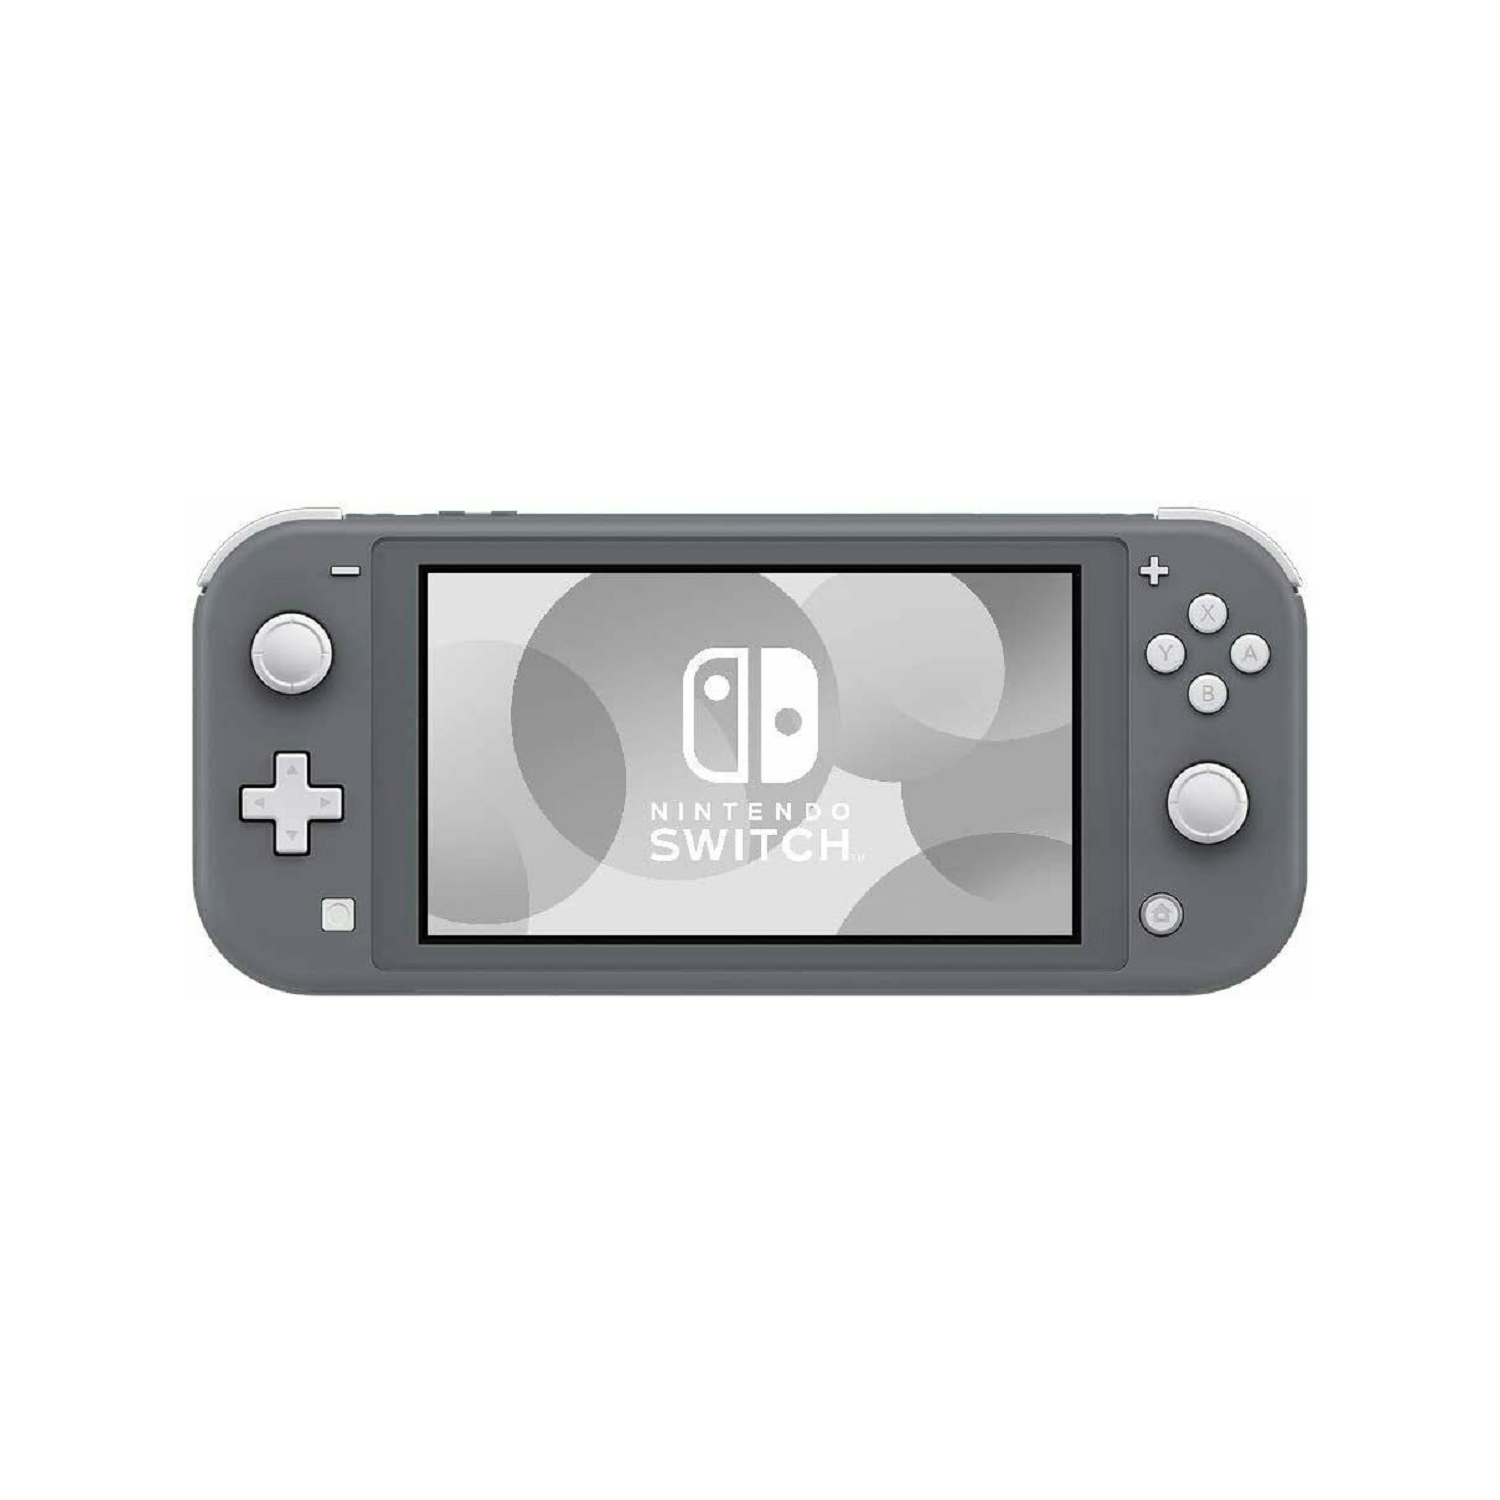 Refurbished (Good) - Nintendo Switch Lite Handheld Gaming Console 32GB Gray